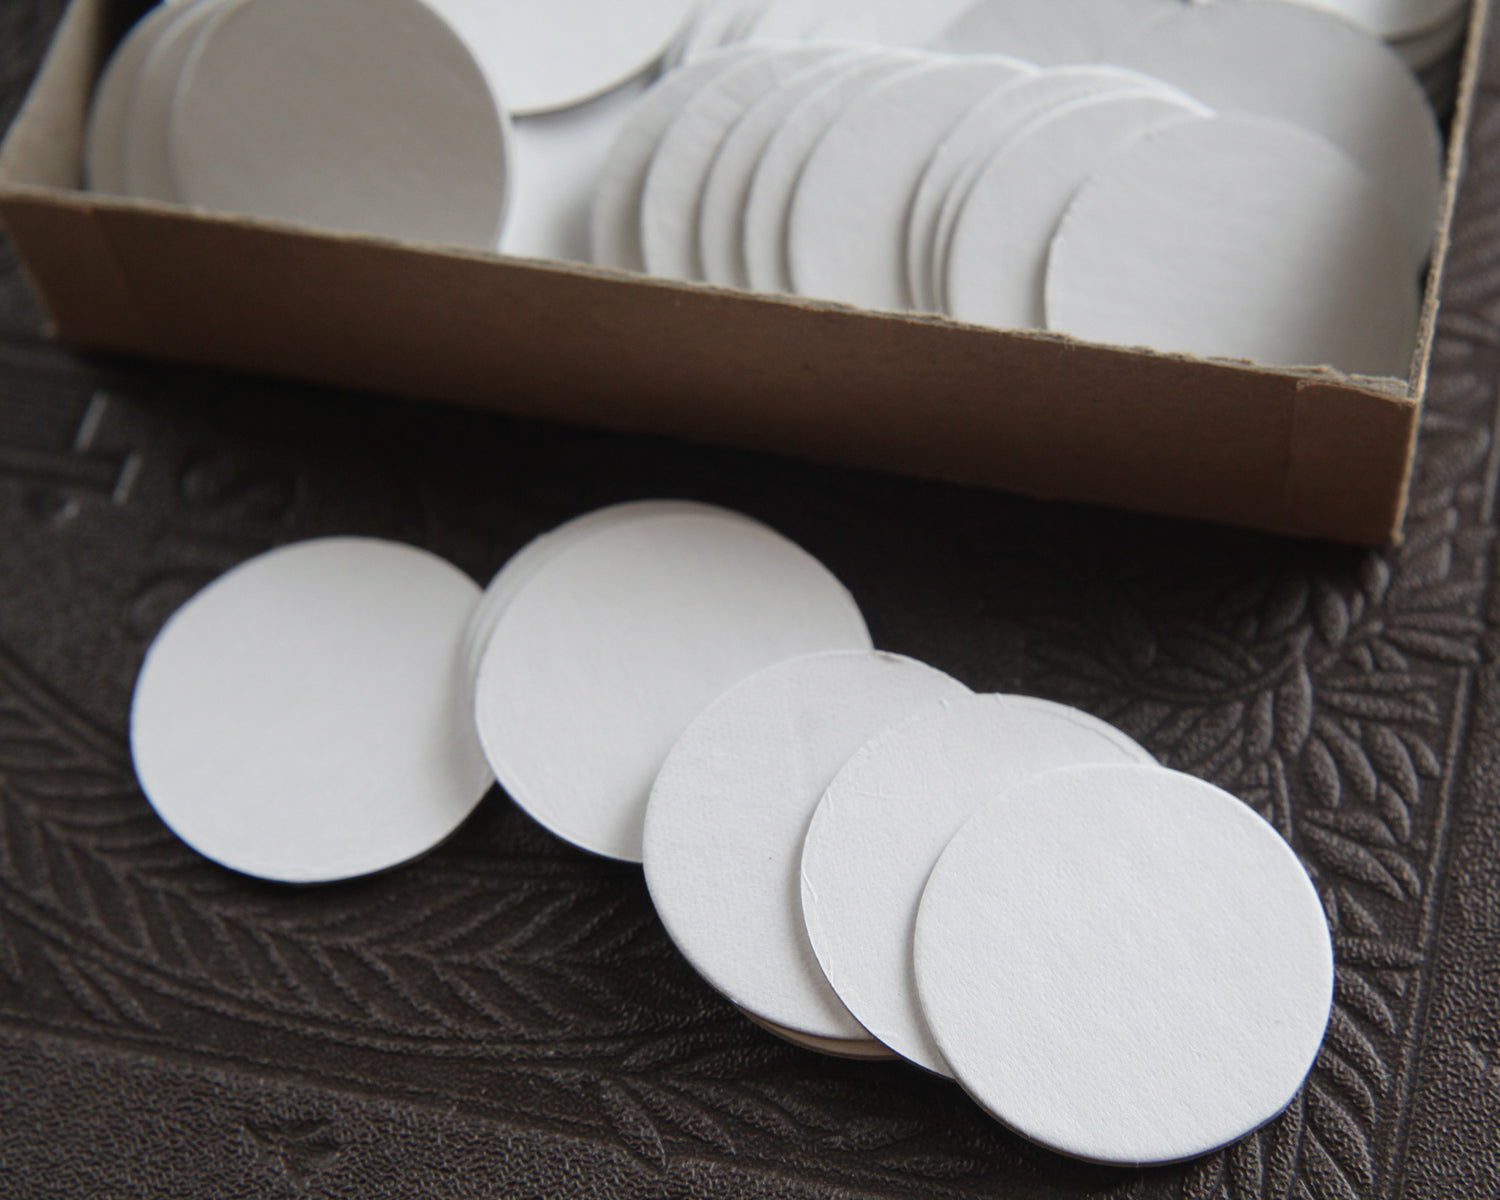 White Chipboard Circles - 1 1/2 Inch Diameter Die Cut Cardboard Rounds, 10 Pcs.